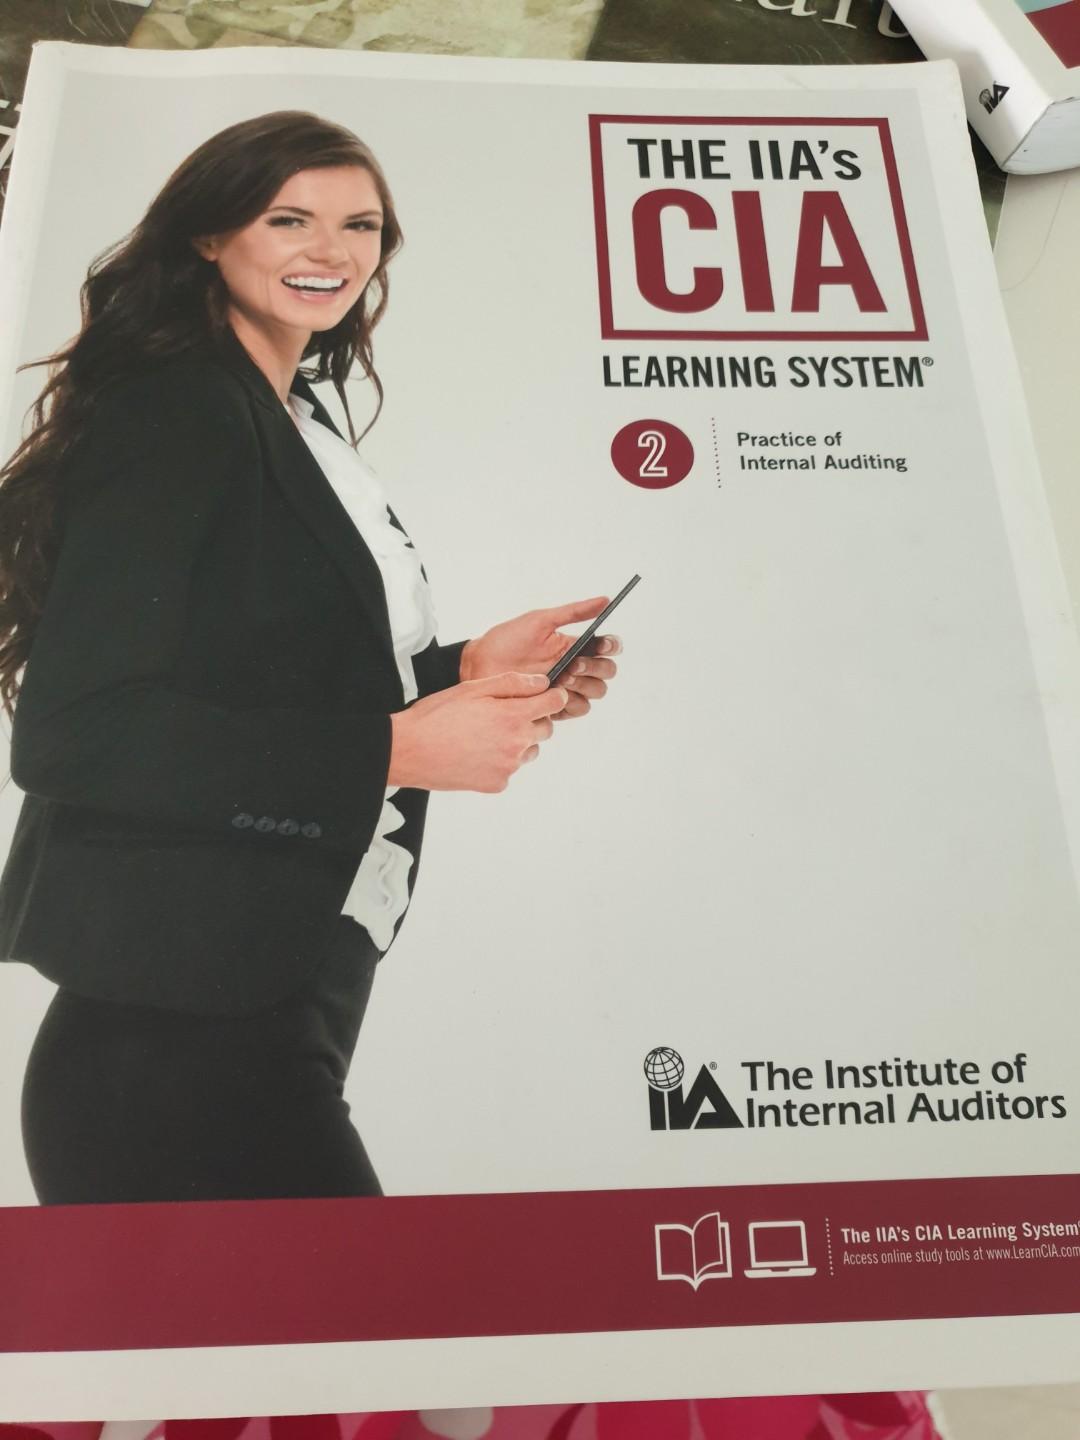 IIA-CIA-Part2 Fragenkatalog